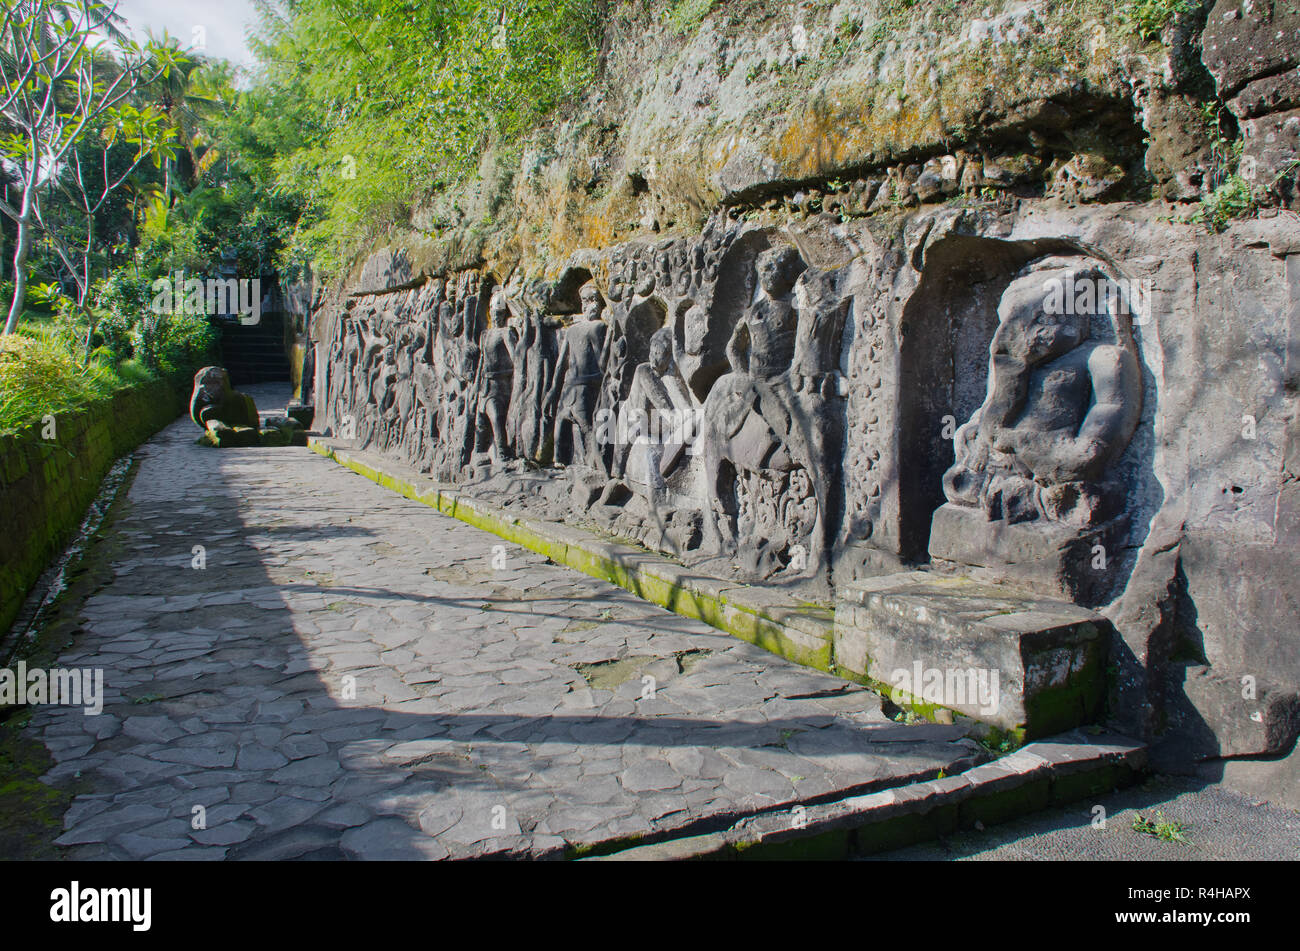 Yeh Pulu rock carvings, Bali Stock Photo